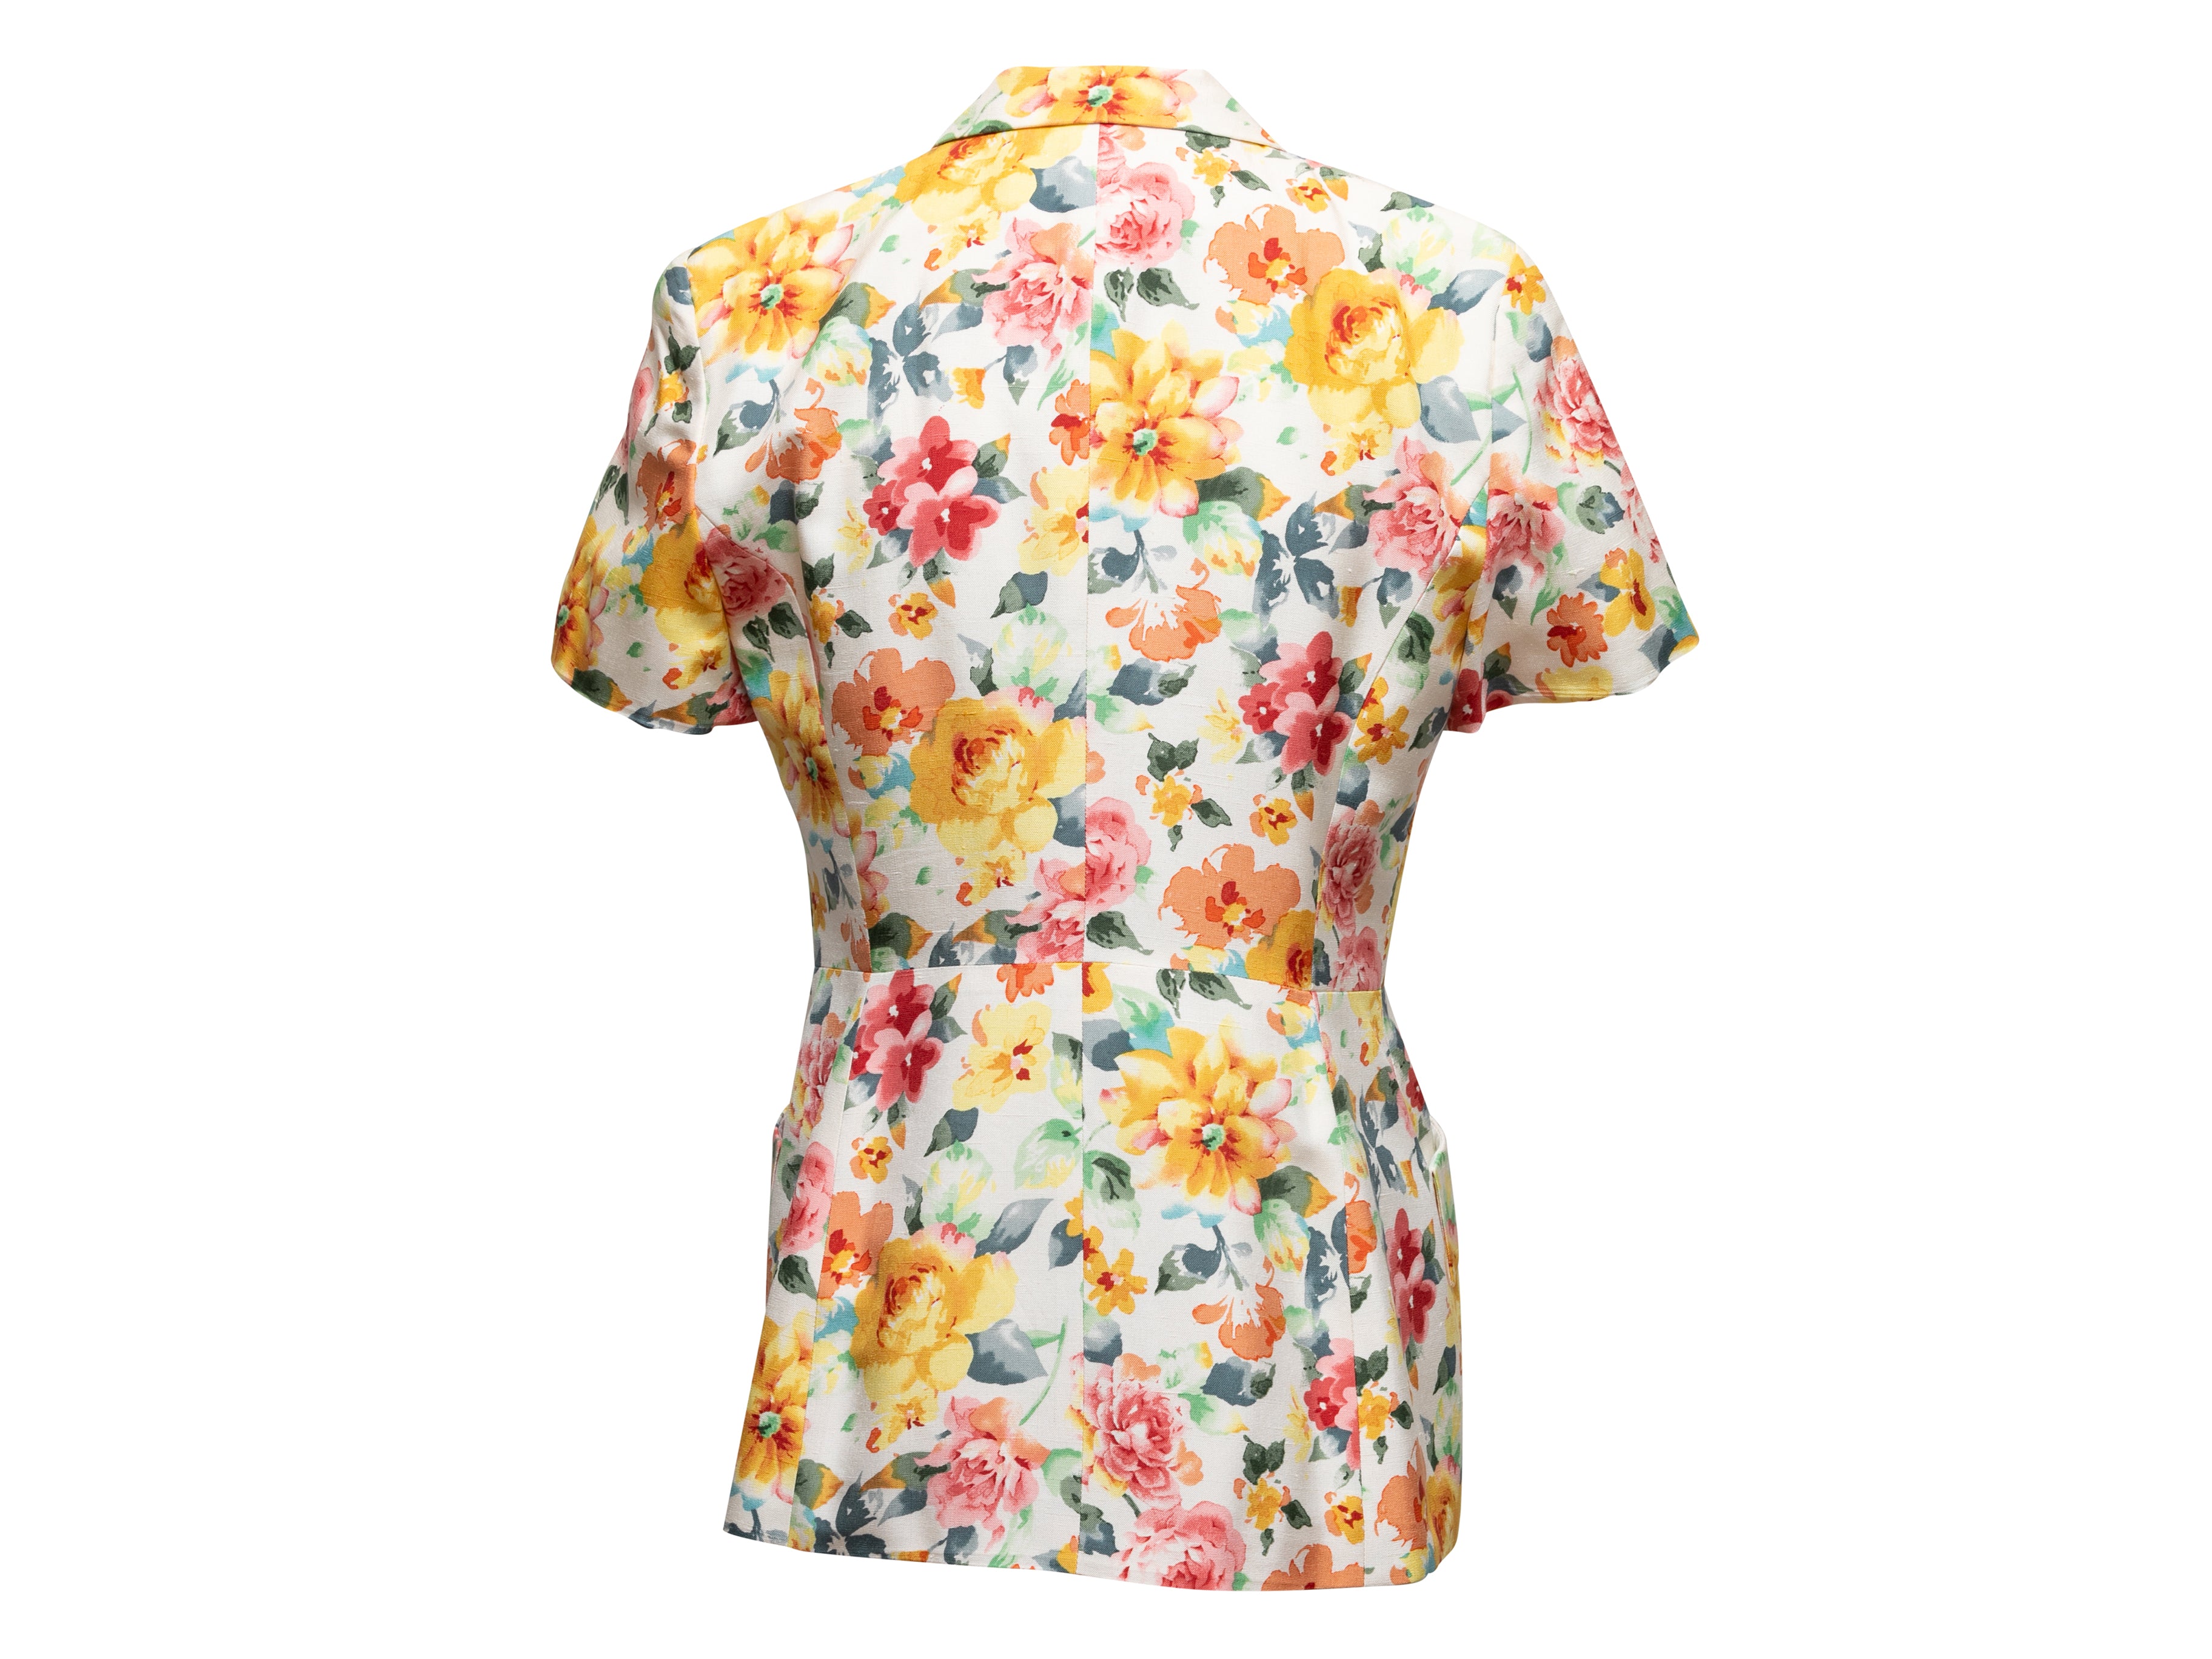 Multicolor Floral Print Short Sleeve Jacket Size US 8